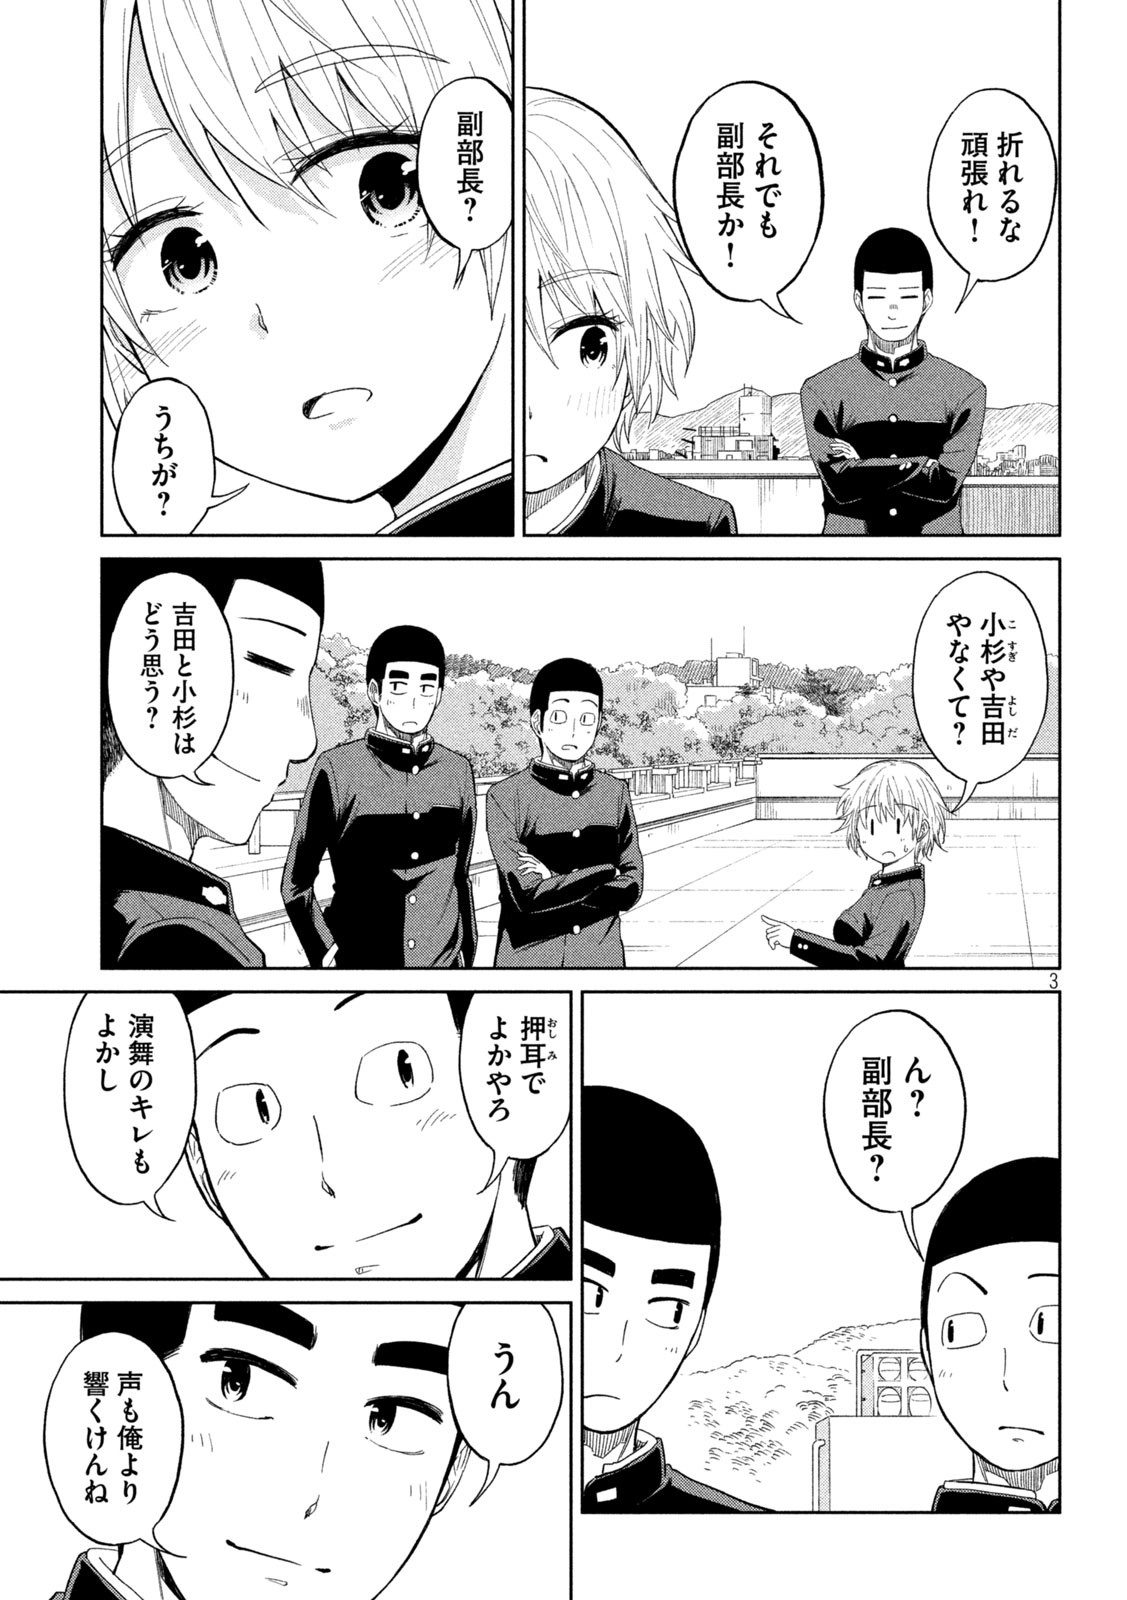 Koharu haru! - Chapter 96 - Page 3